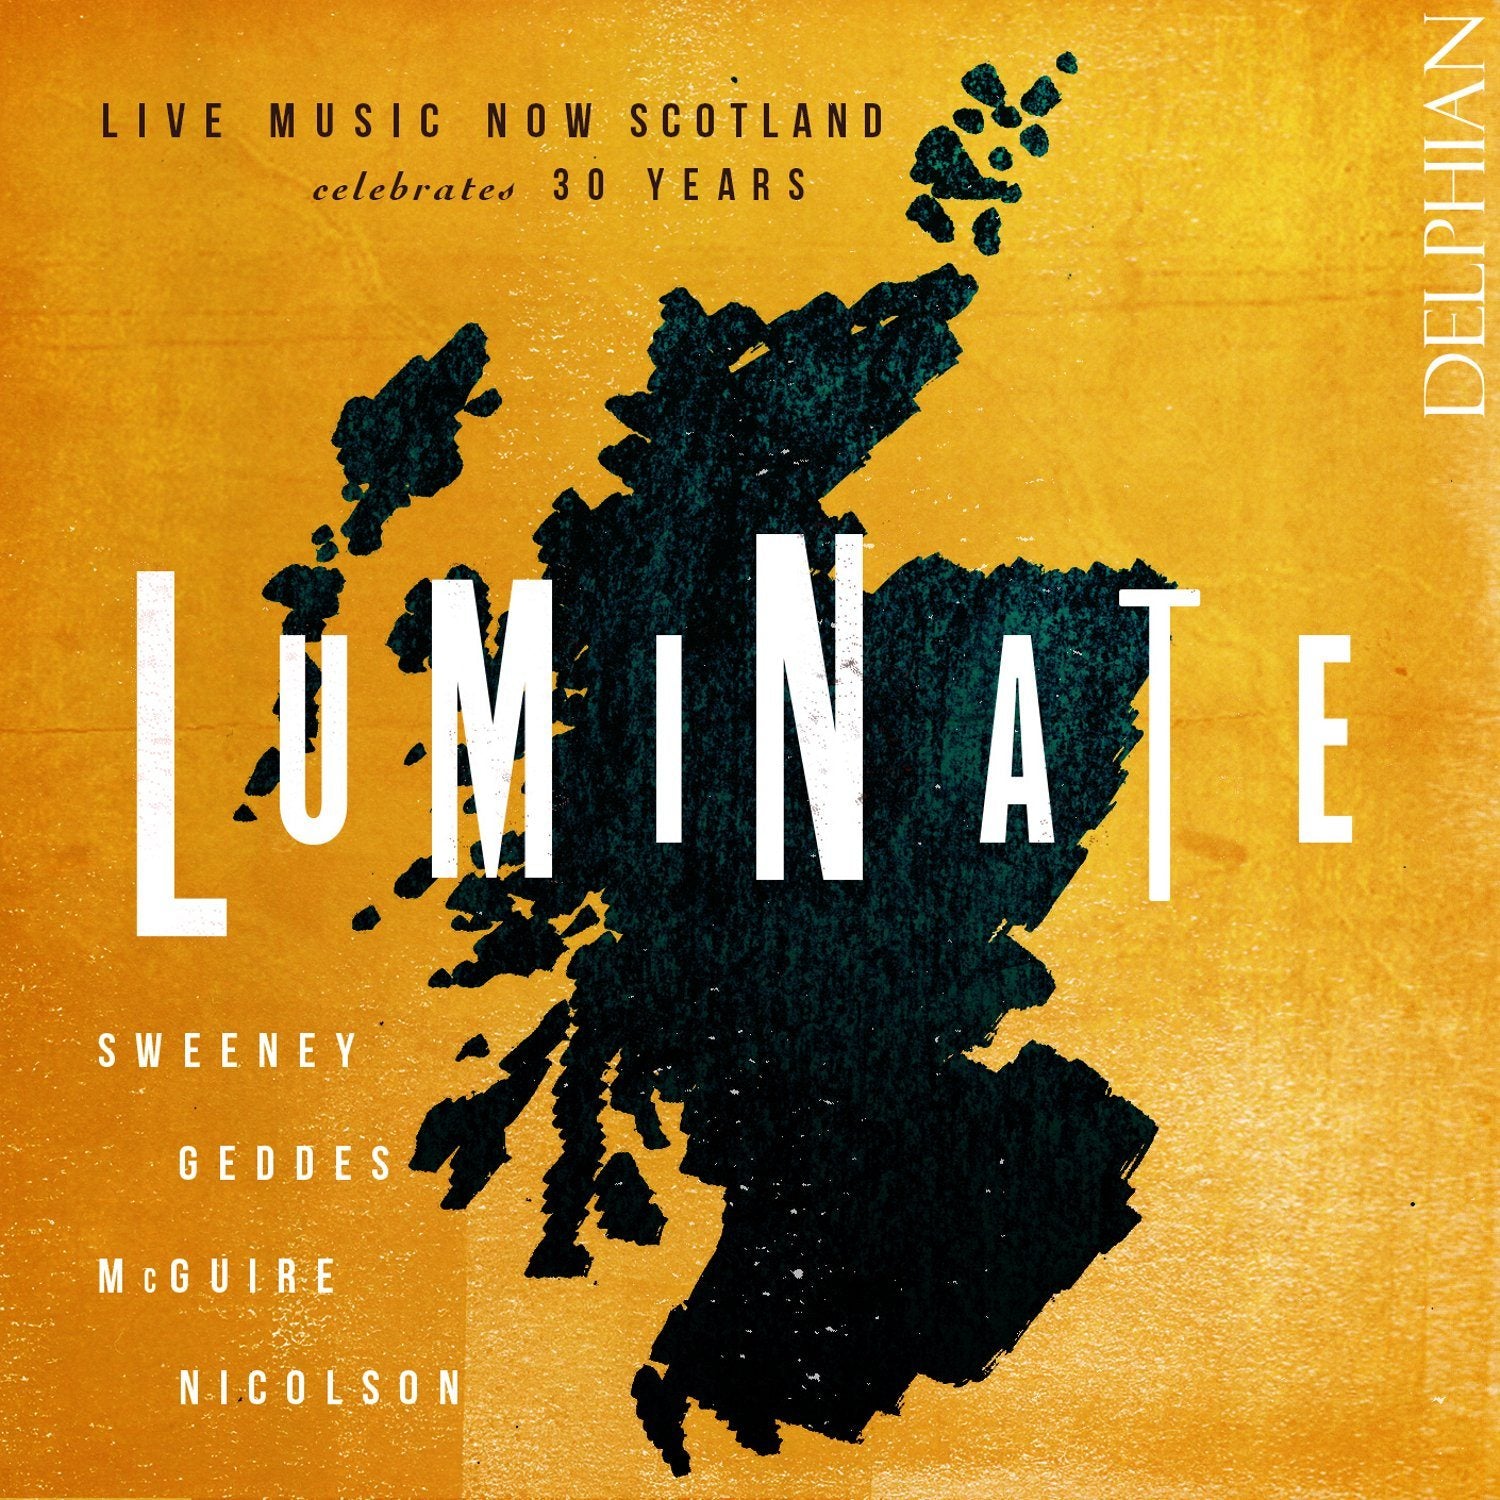 Luminate: Live Music Now Scotland celebrates 30 years CD Delphian Records